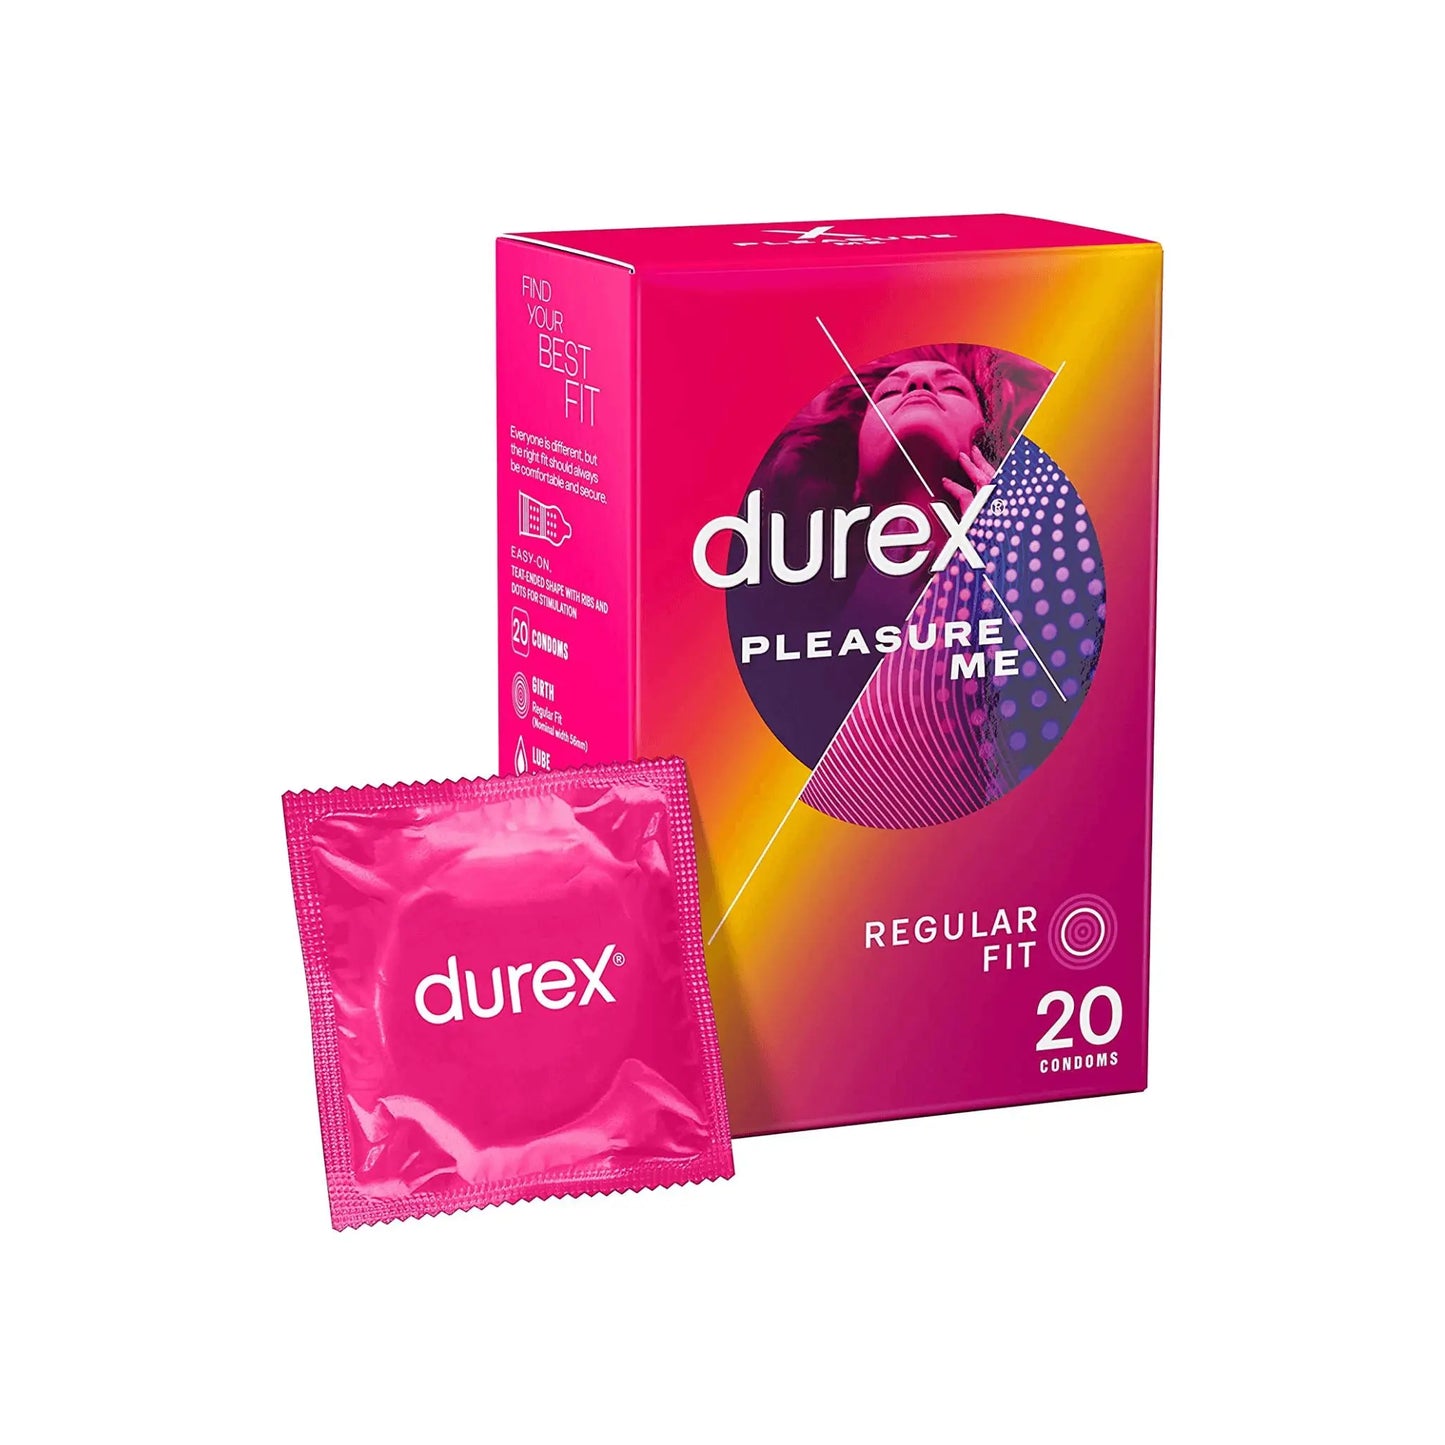 Durex Pleasure Me Ribbed Regular Fit Condoms Pack of 20